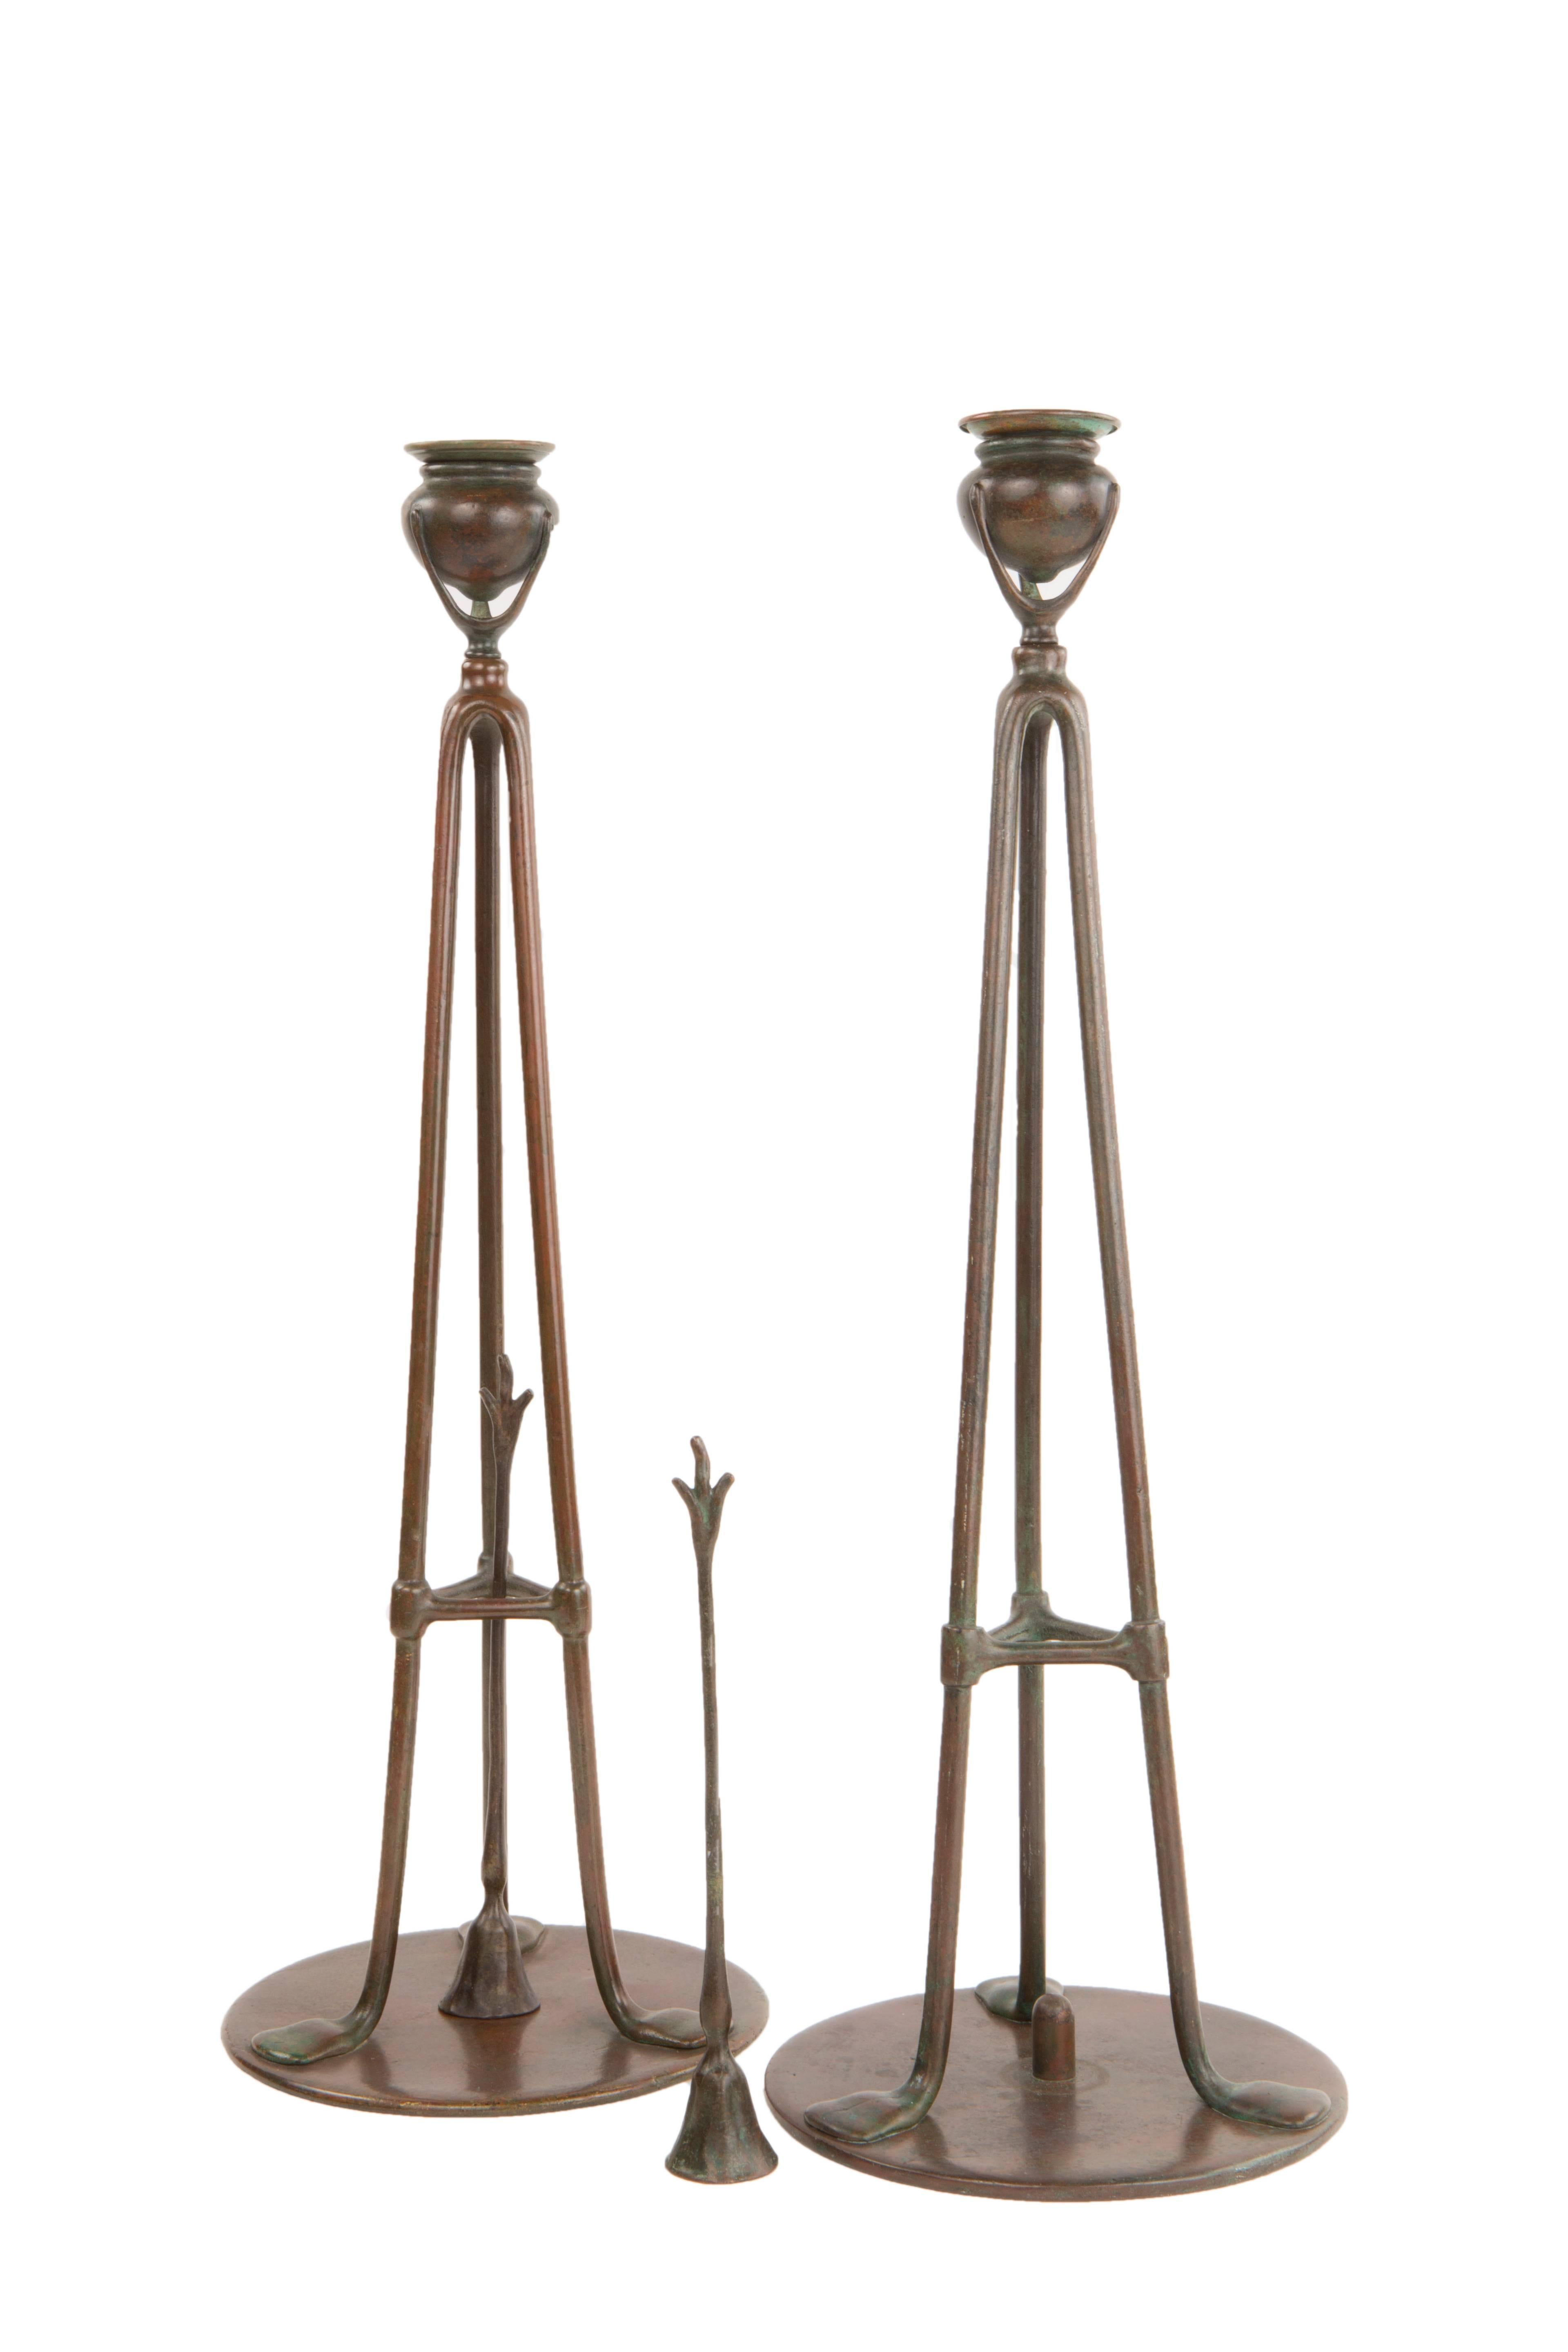 American Pair of Art Nouveau Tiffany Studios Tripod Candlesticks